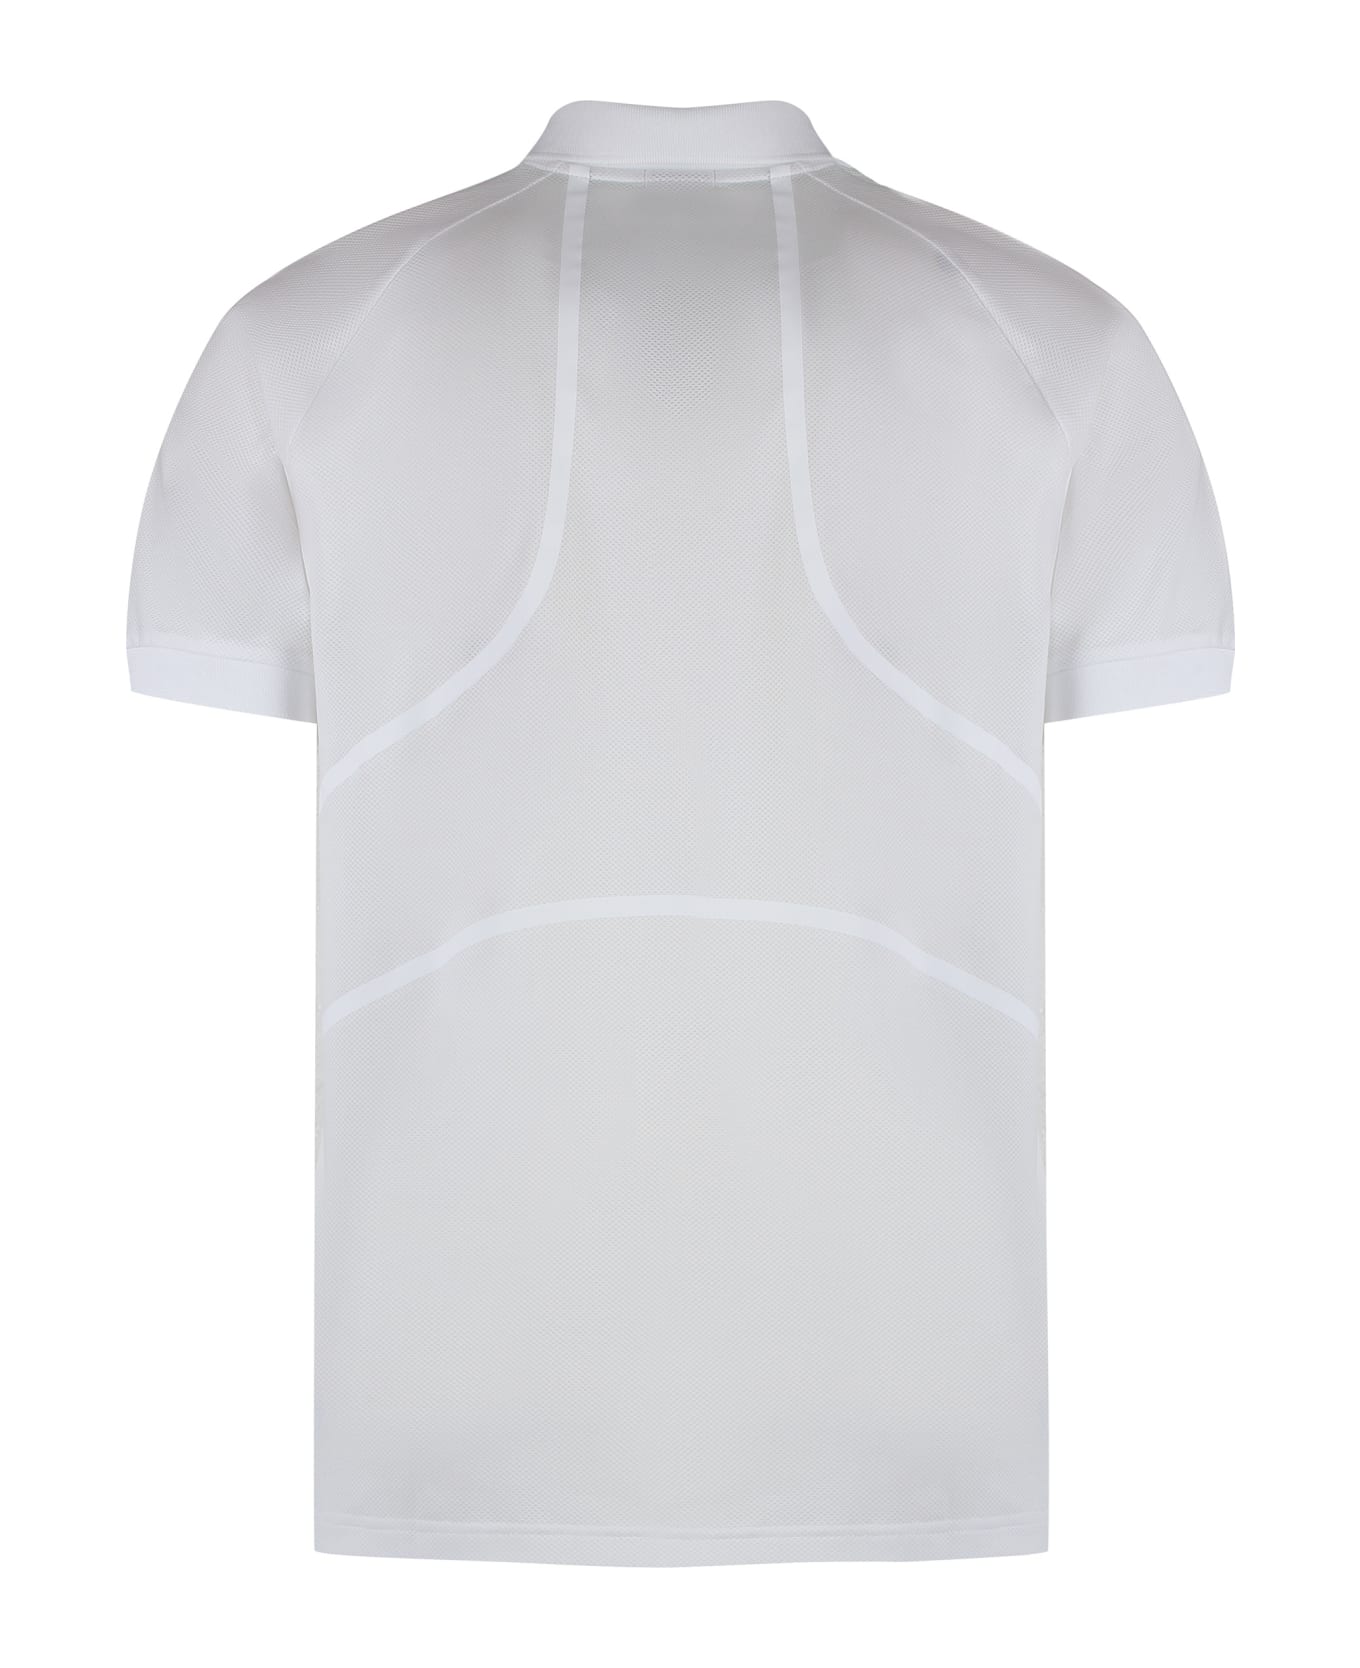 Hugo Boss Technical Fabric Polo Shirt - White ポロシャツ